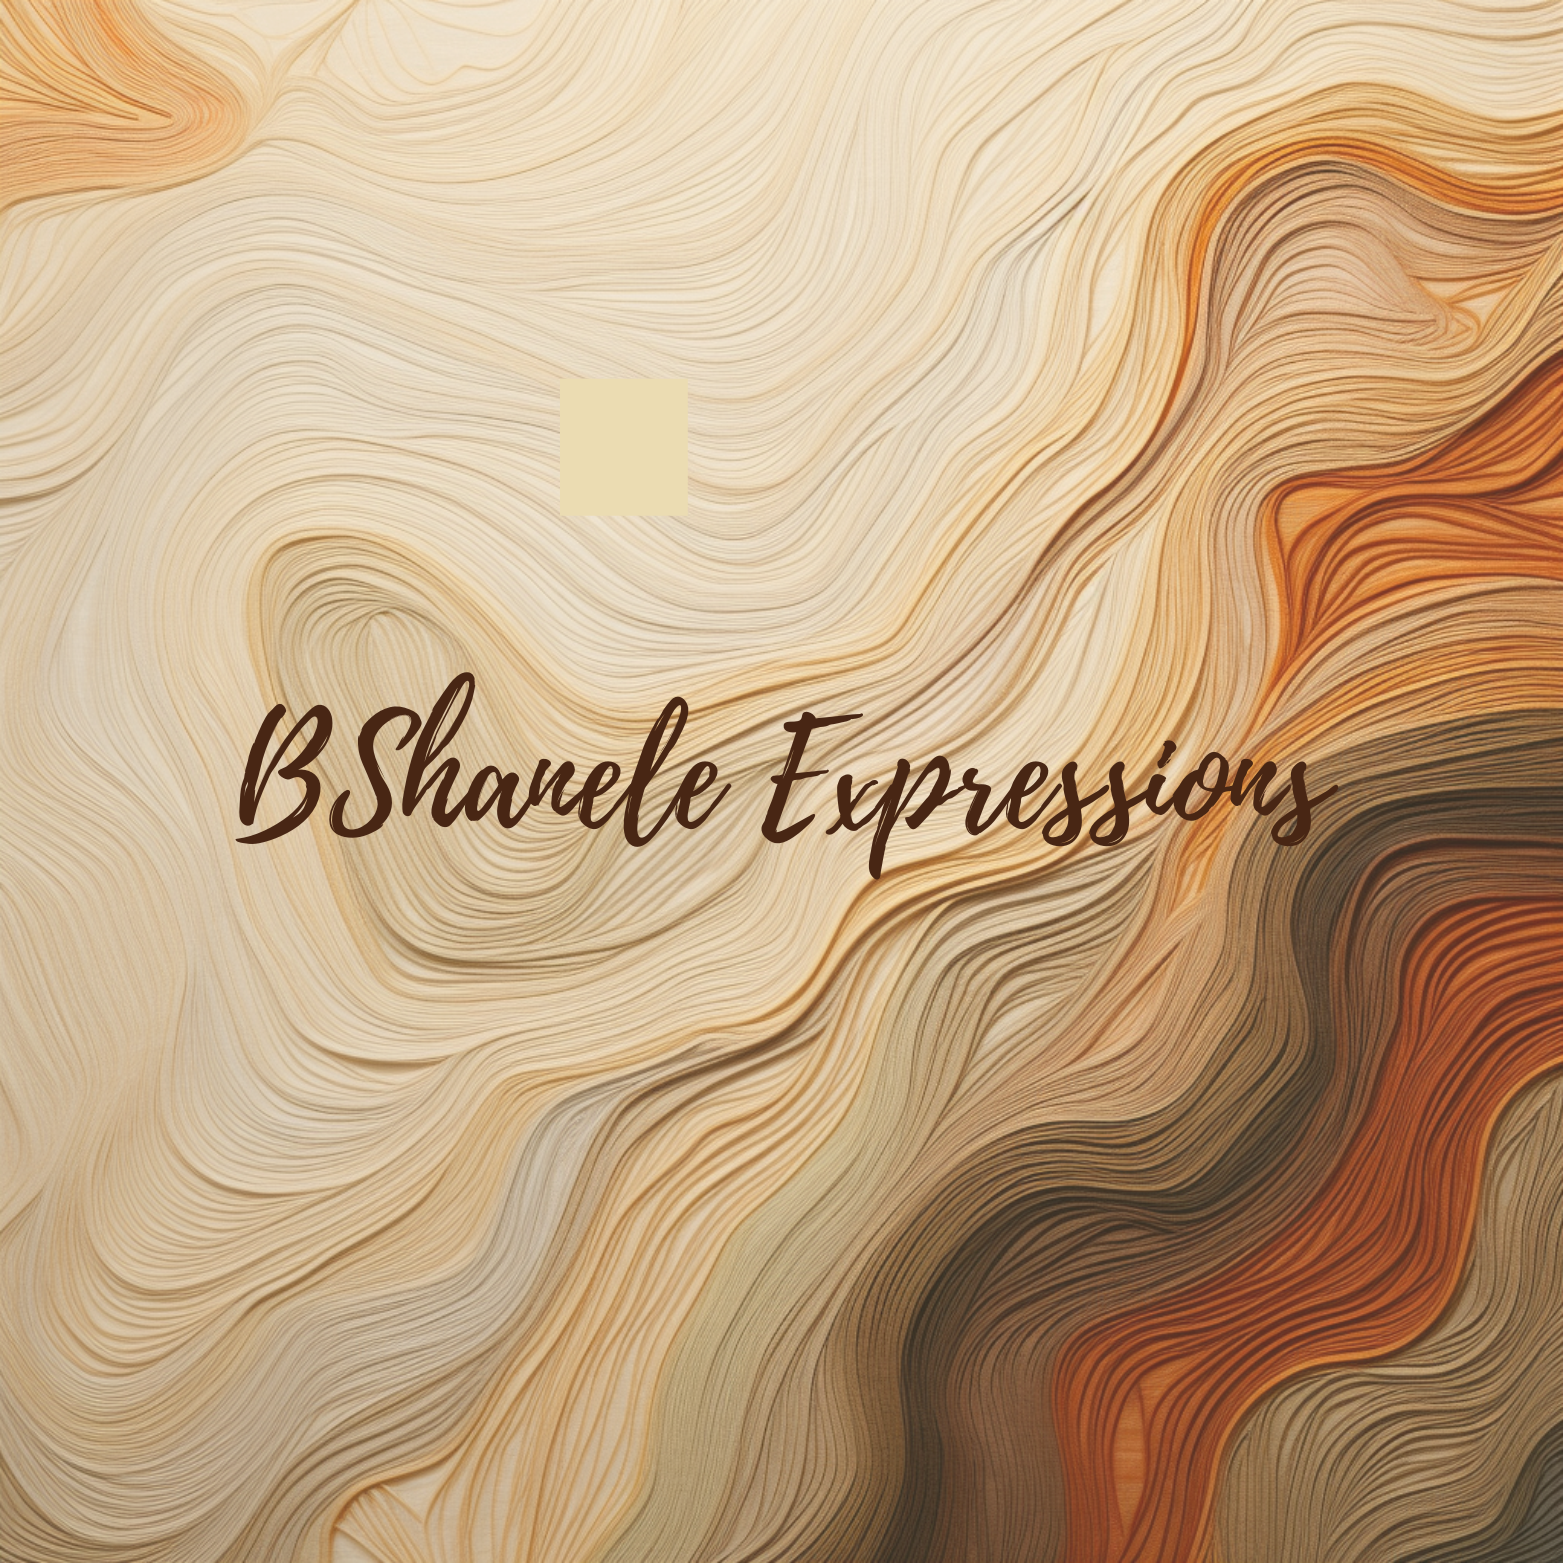 BShanele Expressions